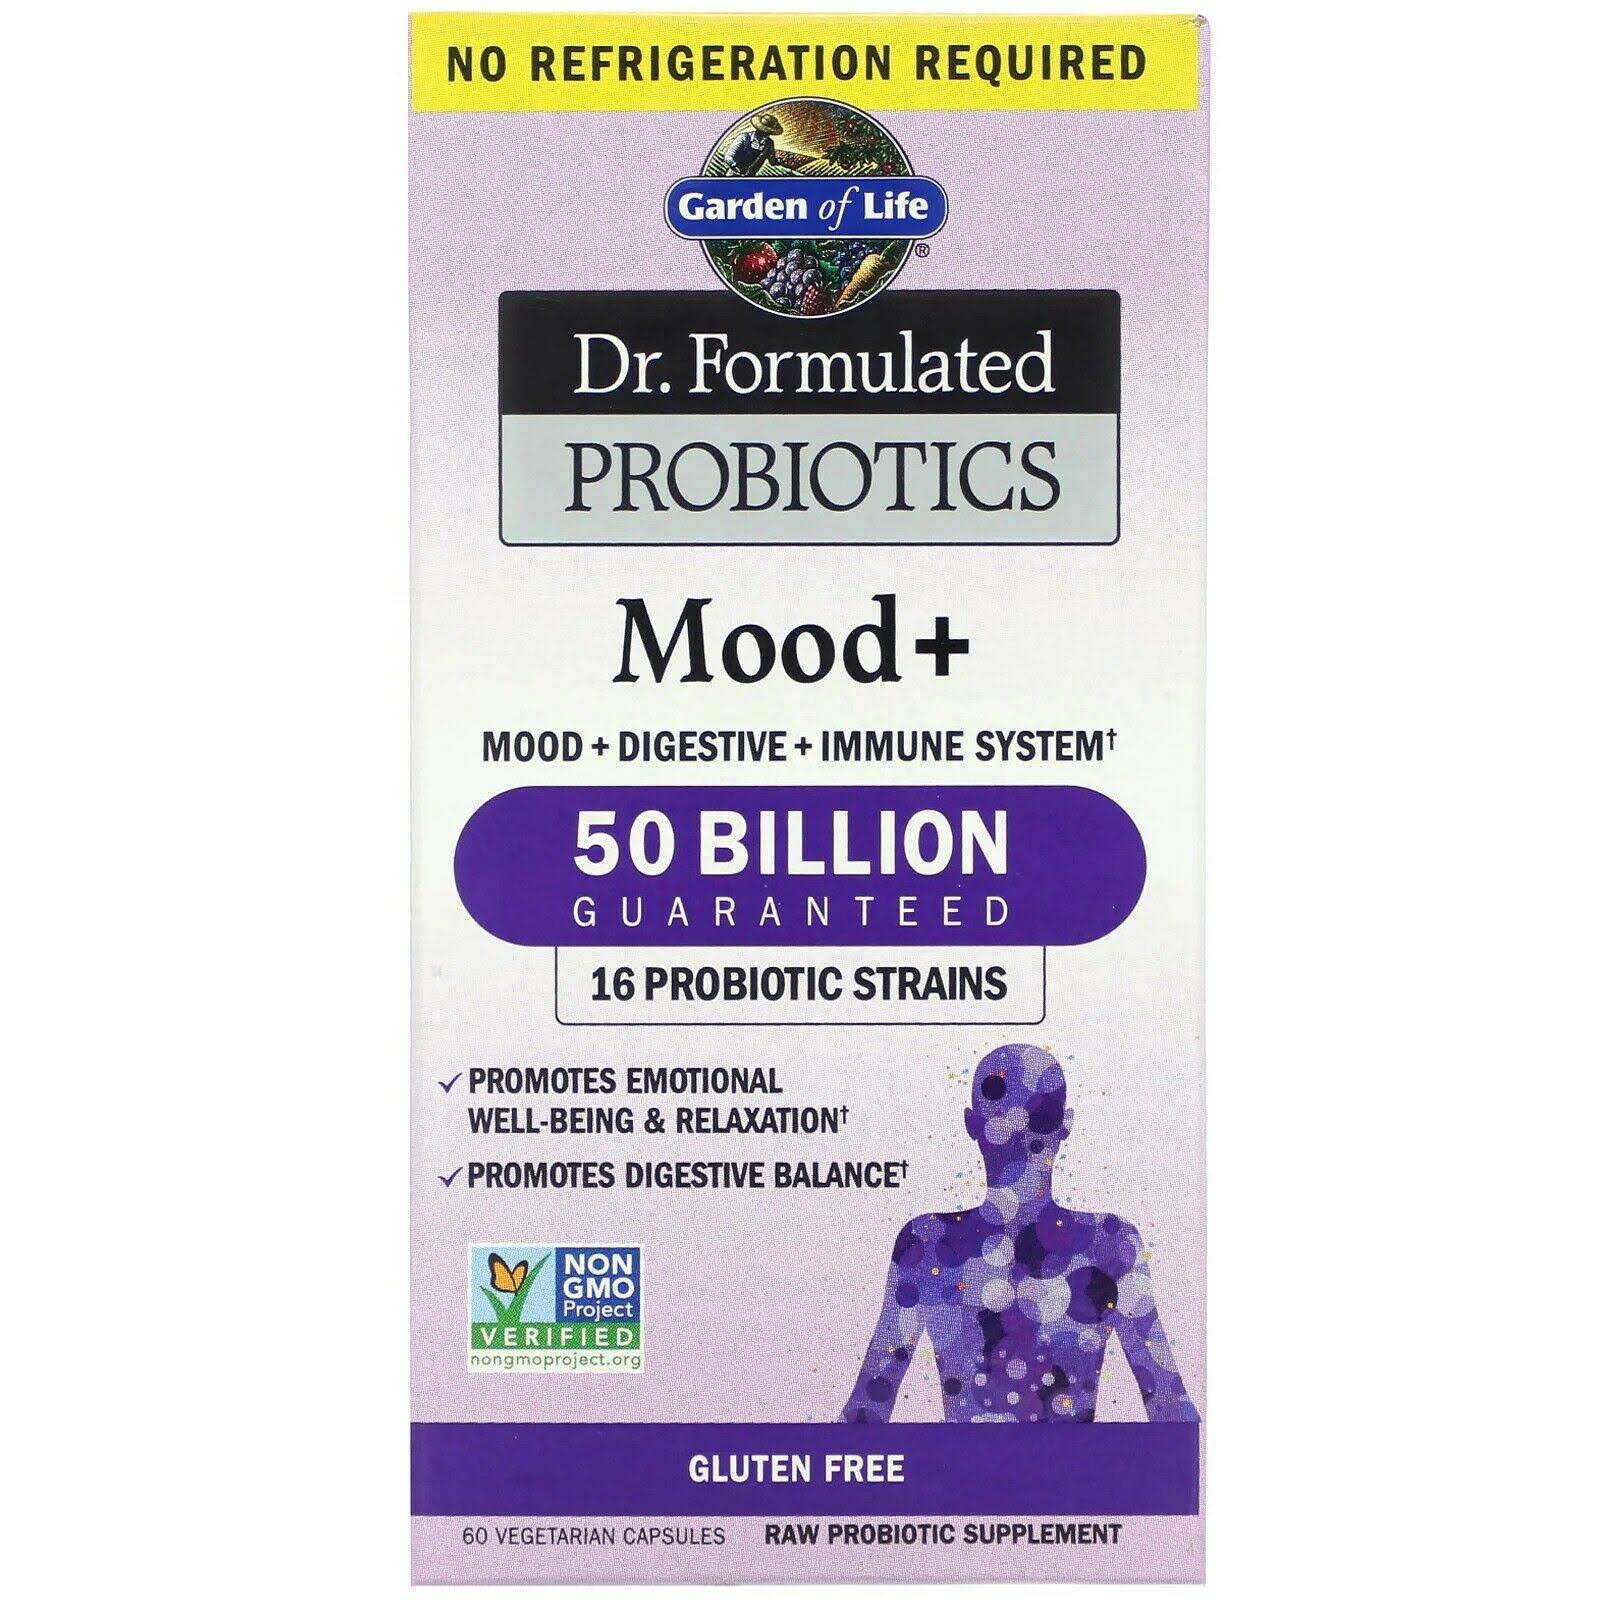 Garden of Life Dr. Formulated Probiotics Mood+ Supplement - 60 Vegetarian Capsules